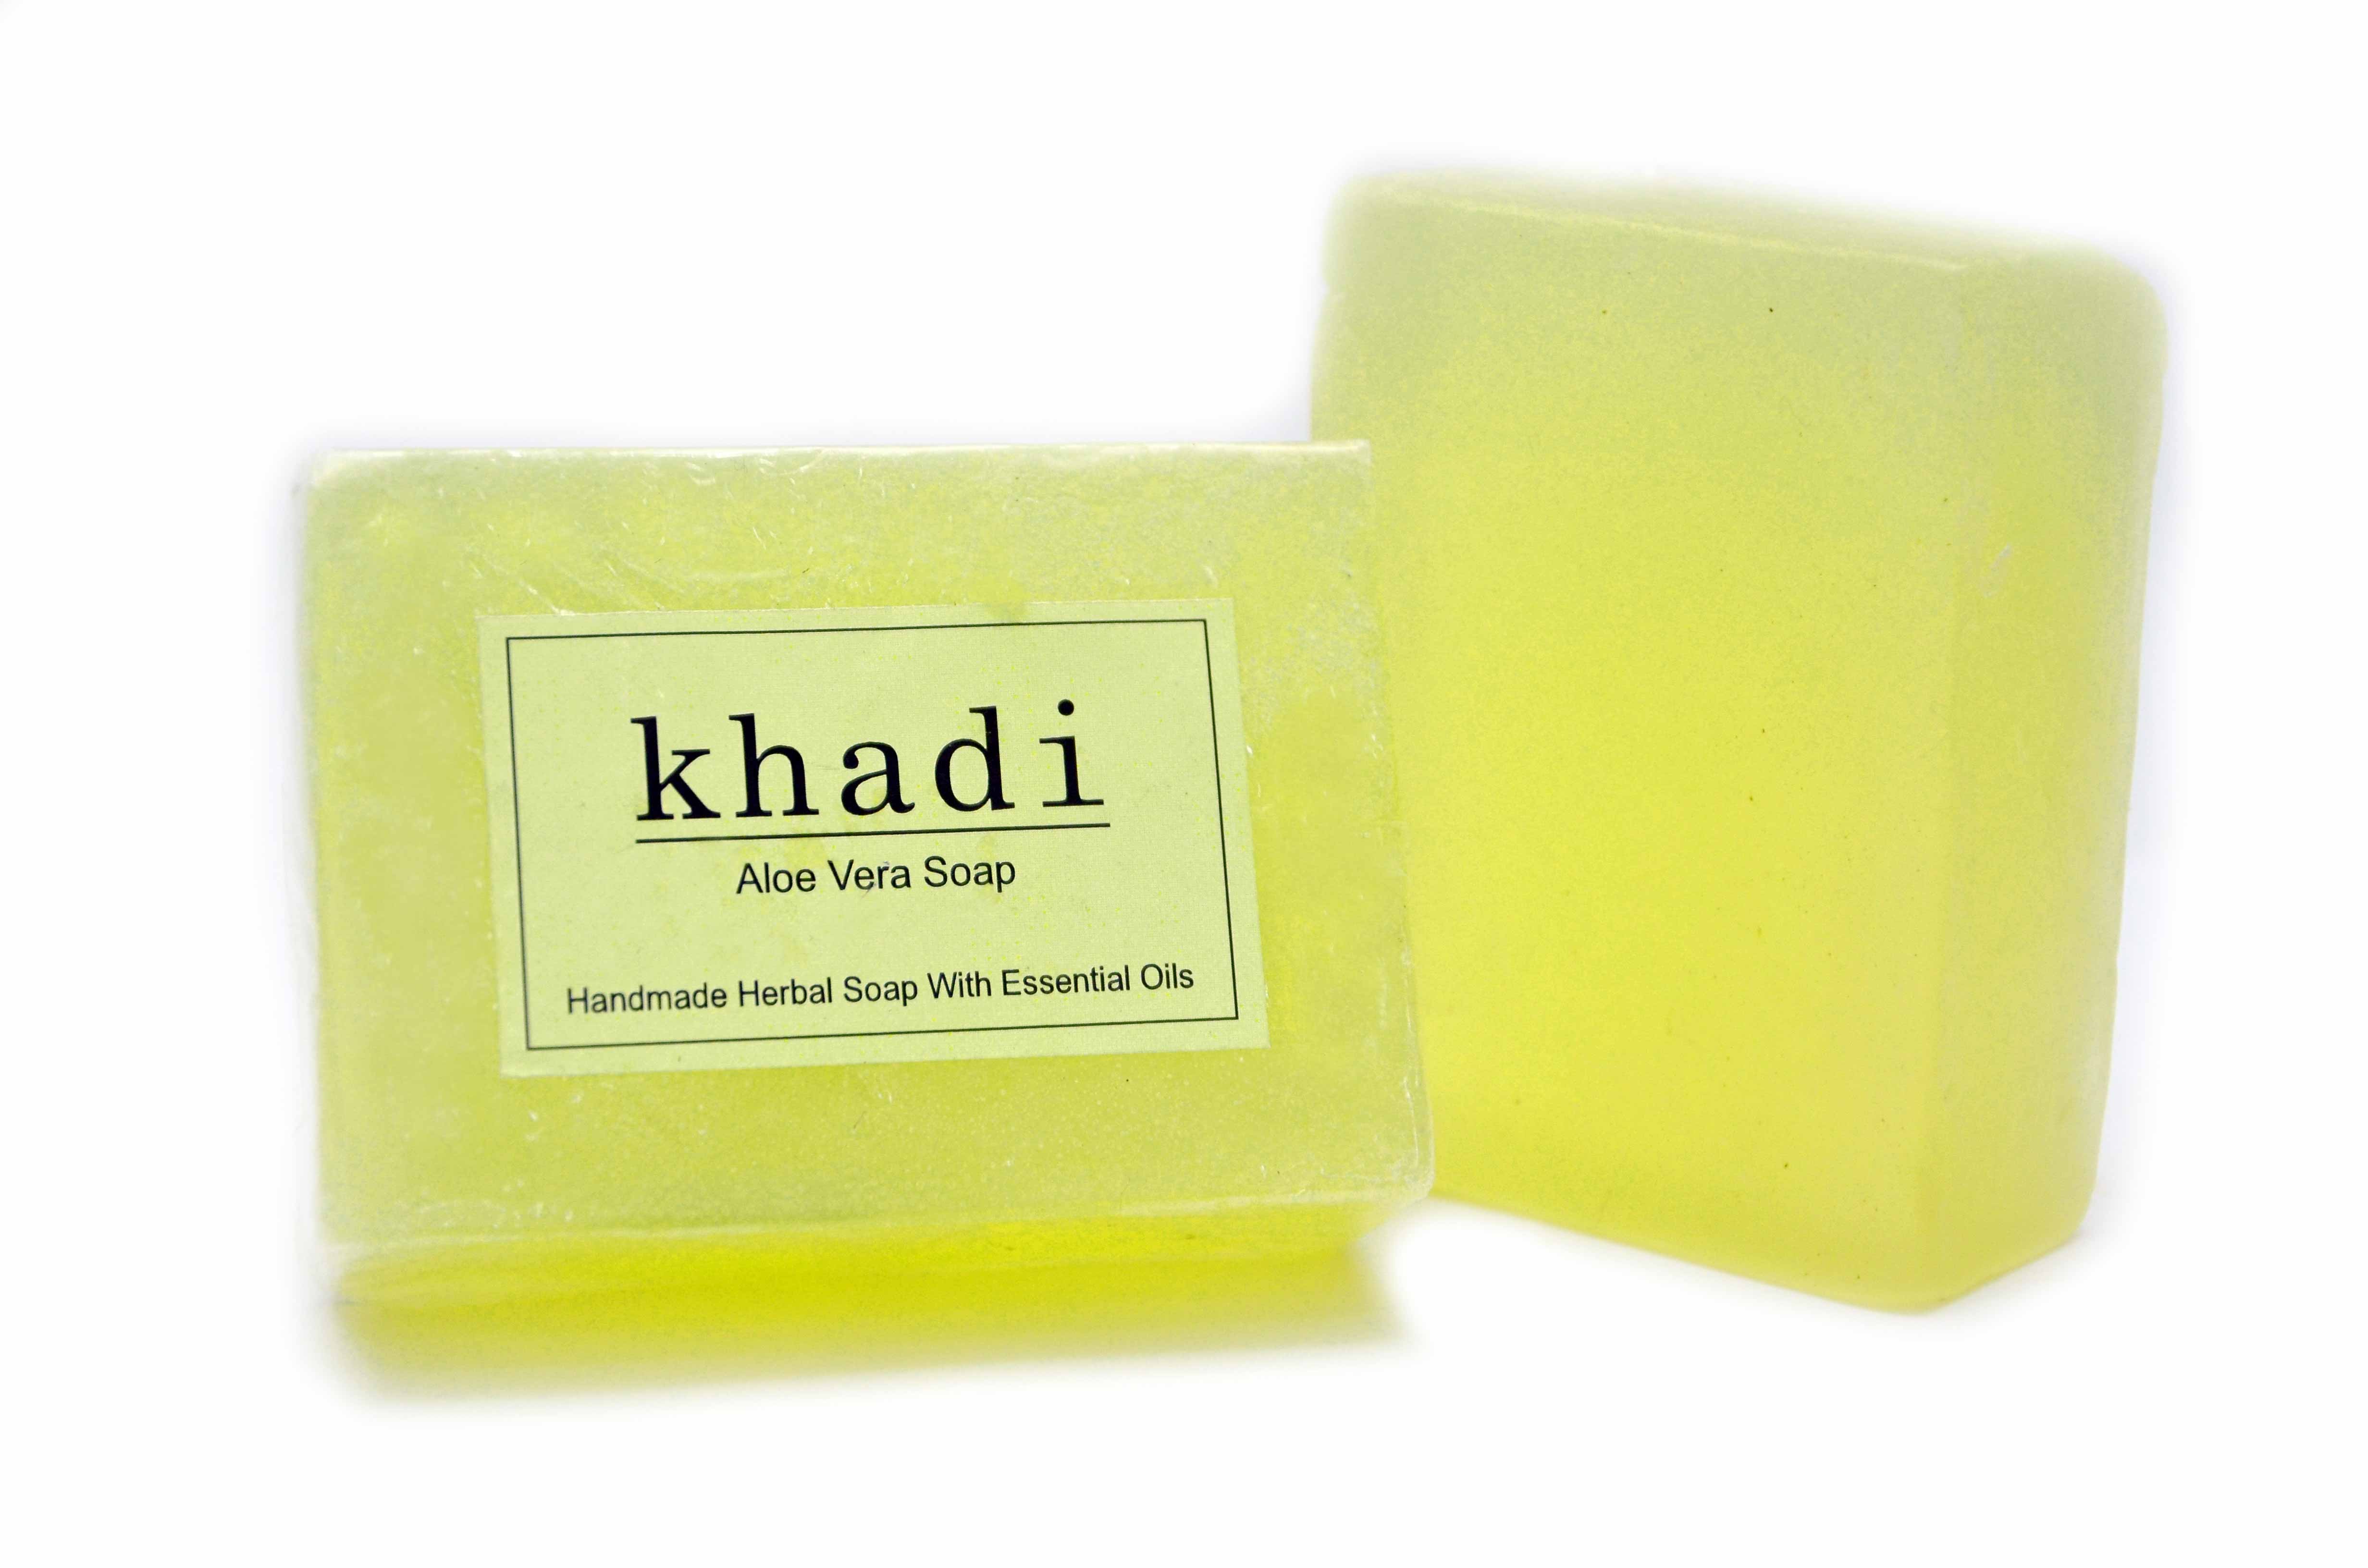 Vagad's Khadi Aloevera Soap